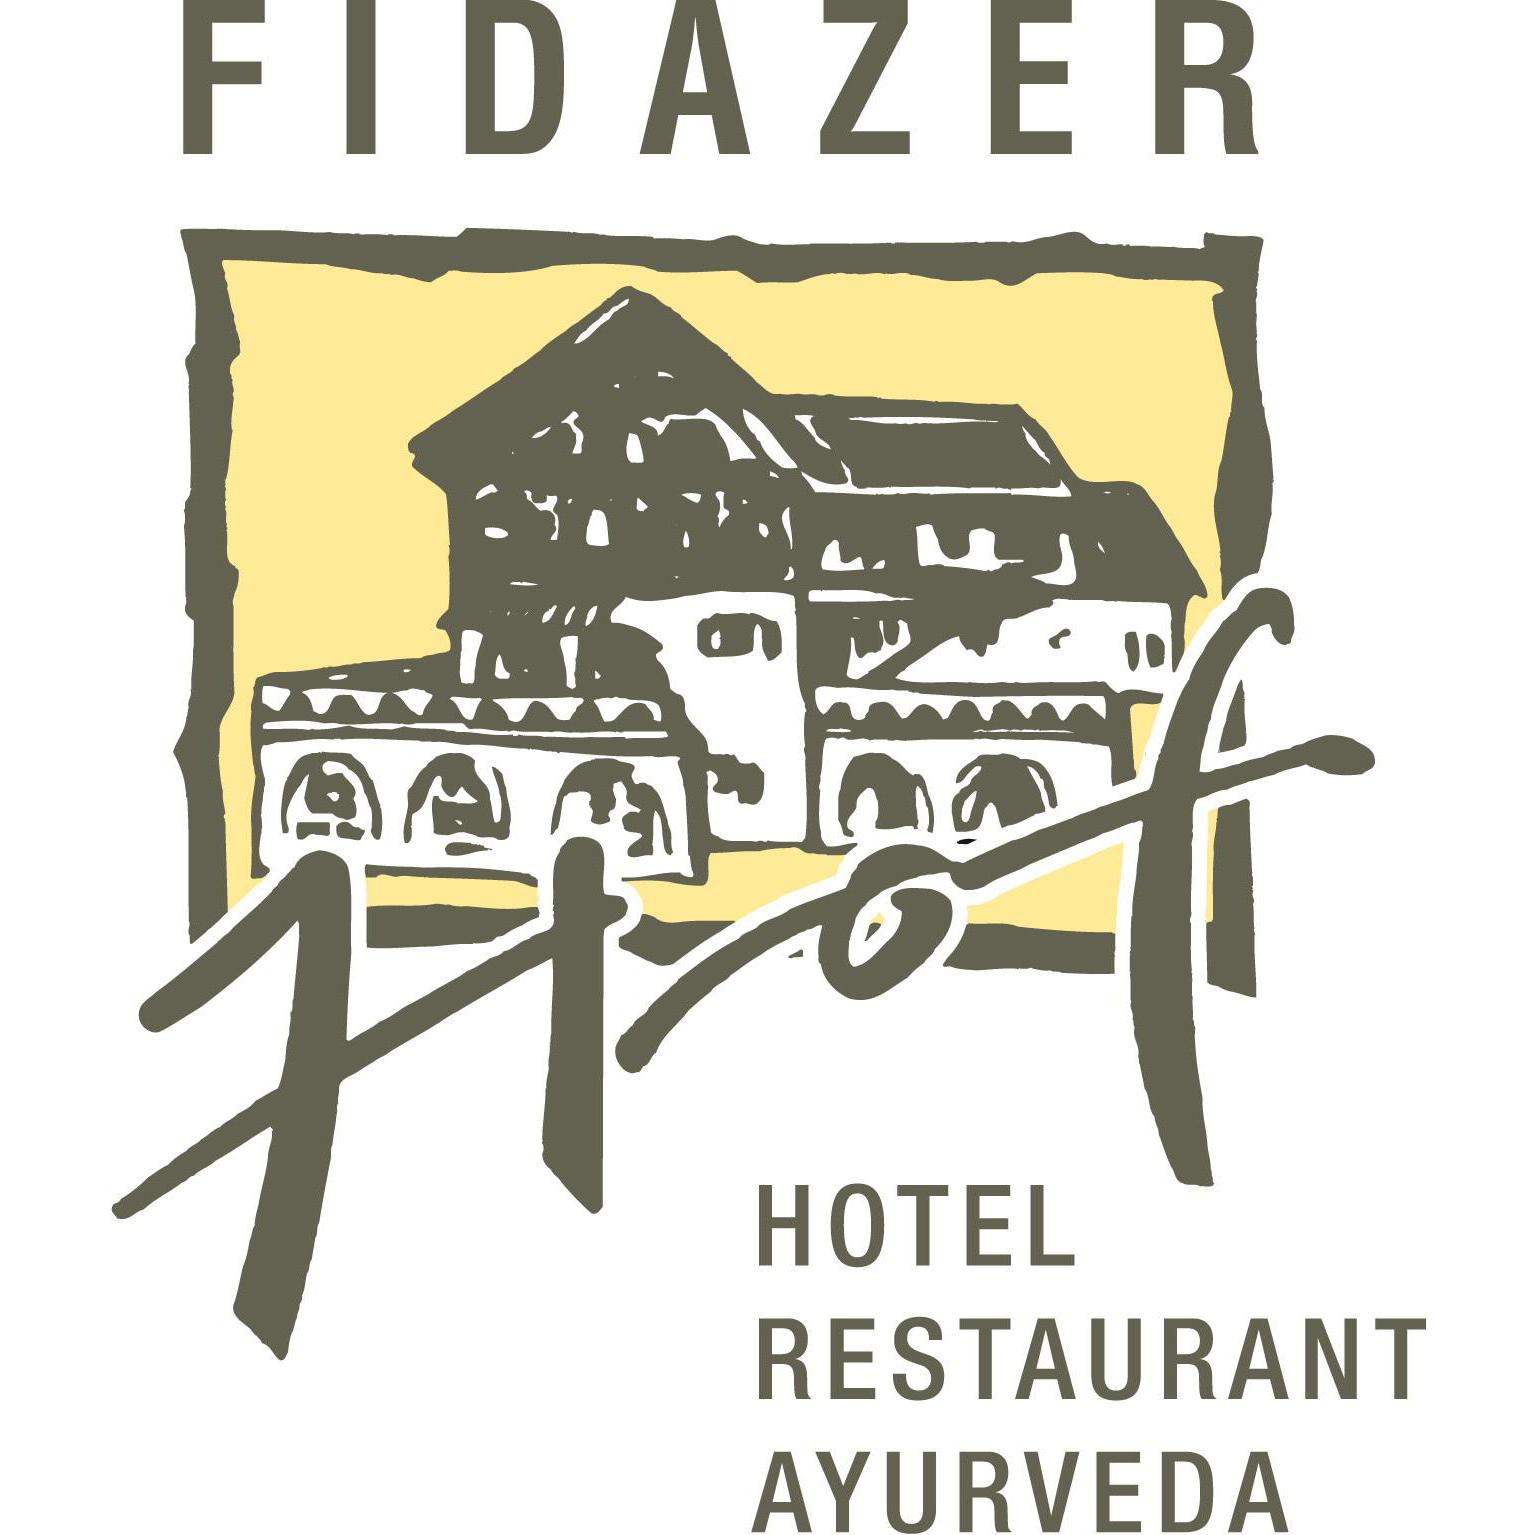 Hotel Fidazerhof Logo